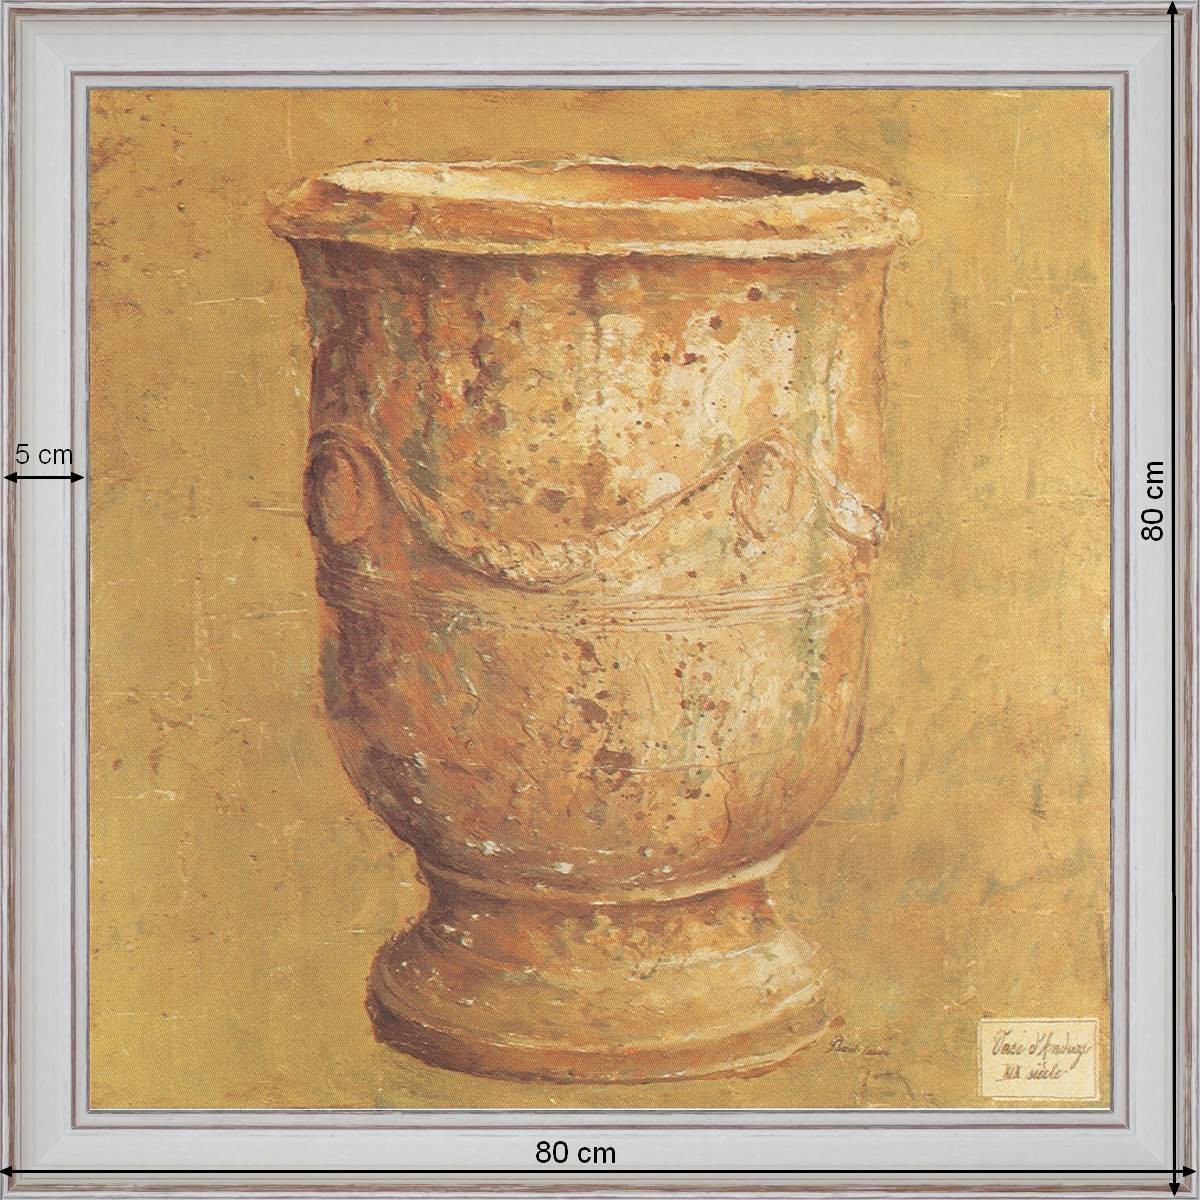 Anduze vase - dimensions 80 x 80 cm - White